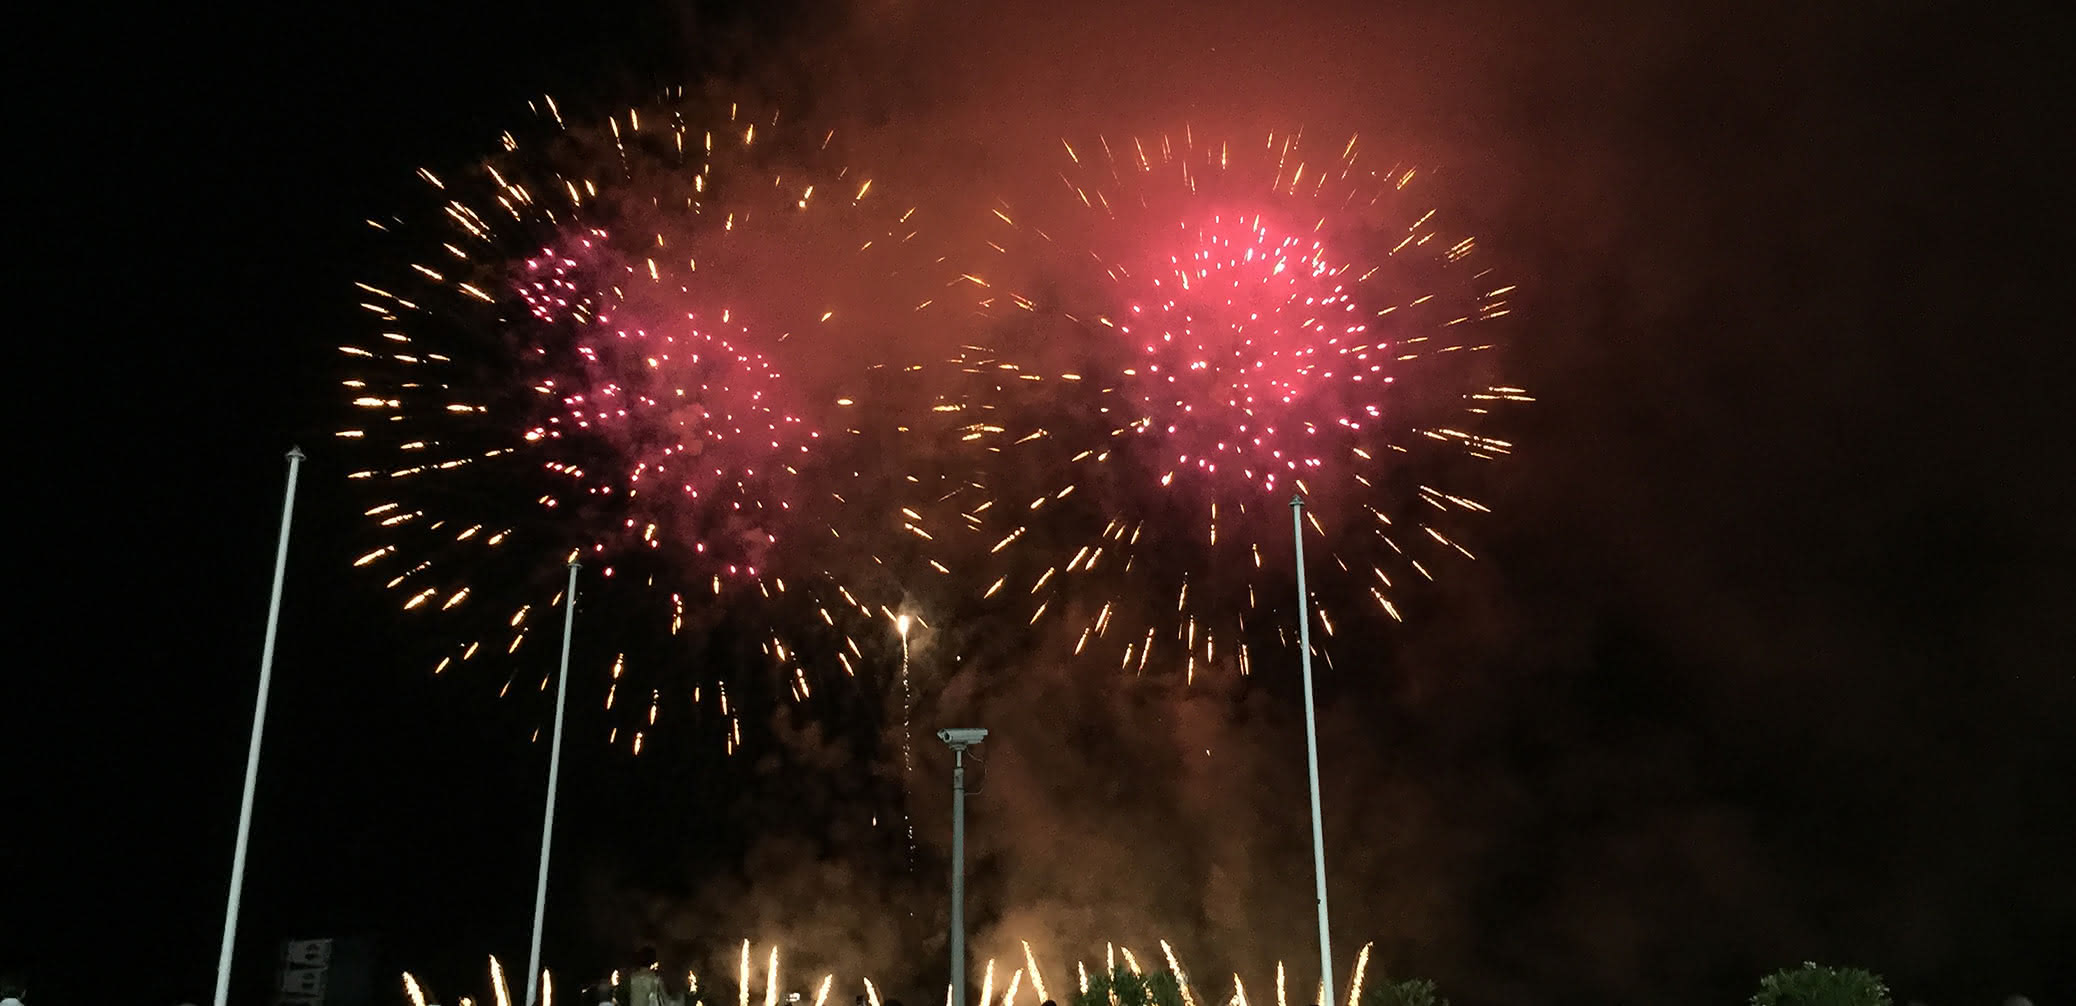 Best Hotel 4th July Fireworks Displays